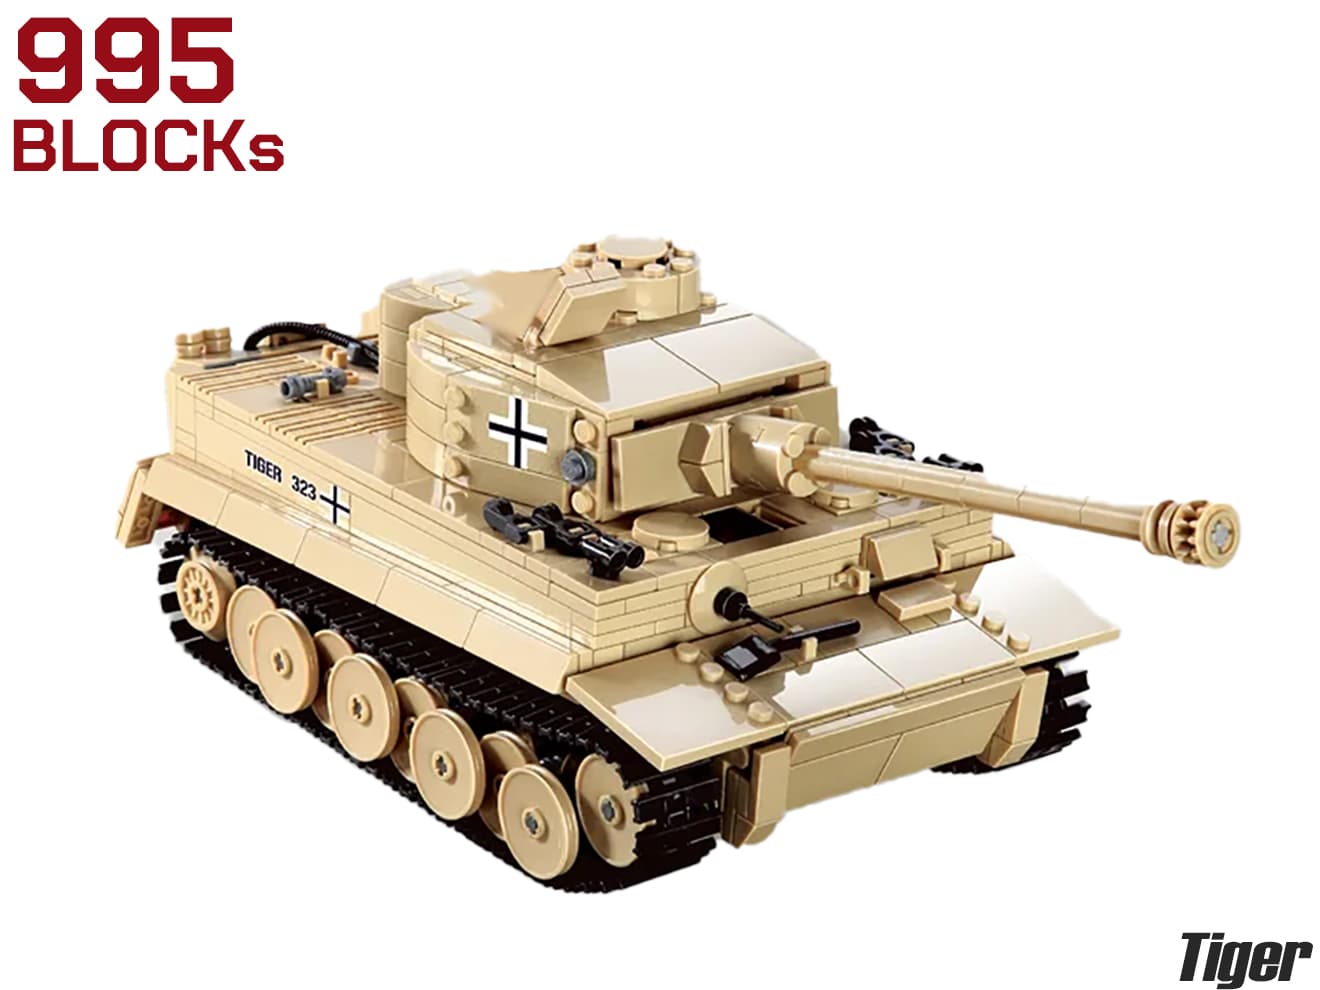 AFM ドイツ軍 Tiger 995Blocks◆タイガー戦車/ティーガー/重戦車/LEGO互換